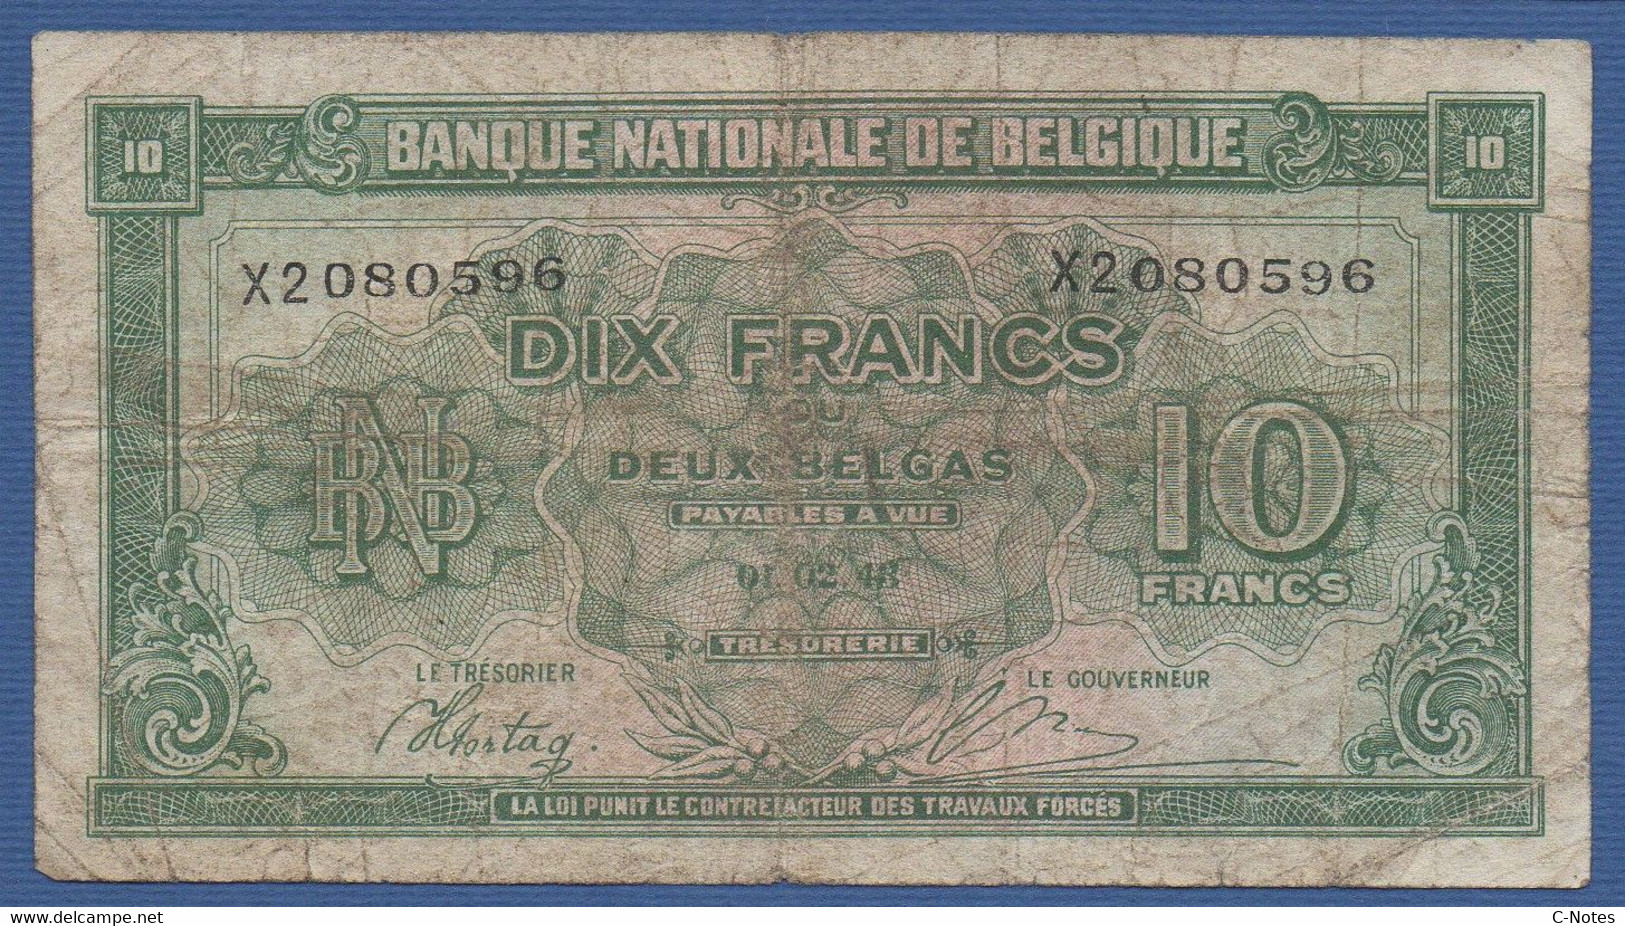 BELGIUM - P.122 – 10 Francs / Frank  = 2 Belgas 1943 CIRCULATED, Serie X2 080596 - 10 Francos-2 Belgas